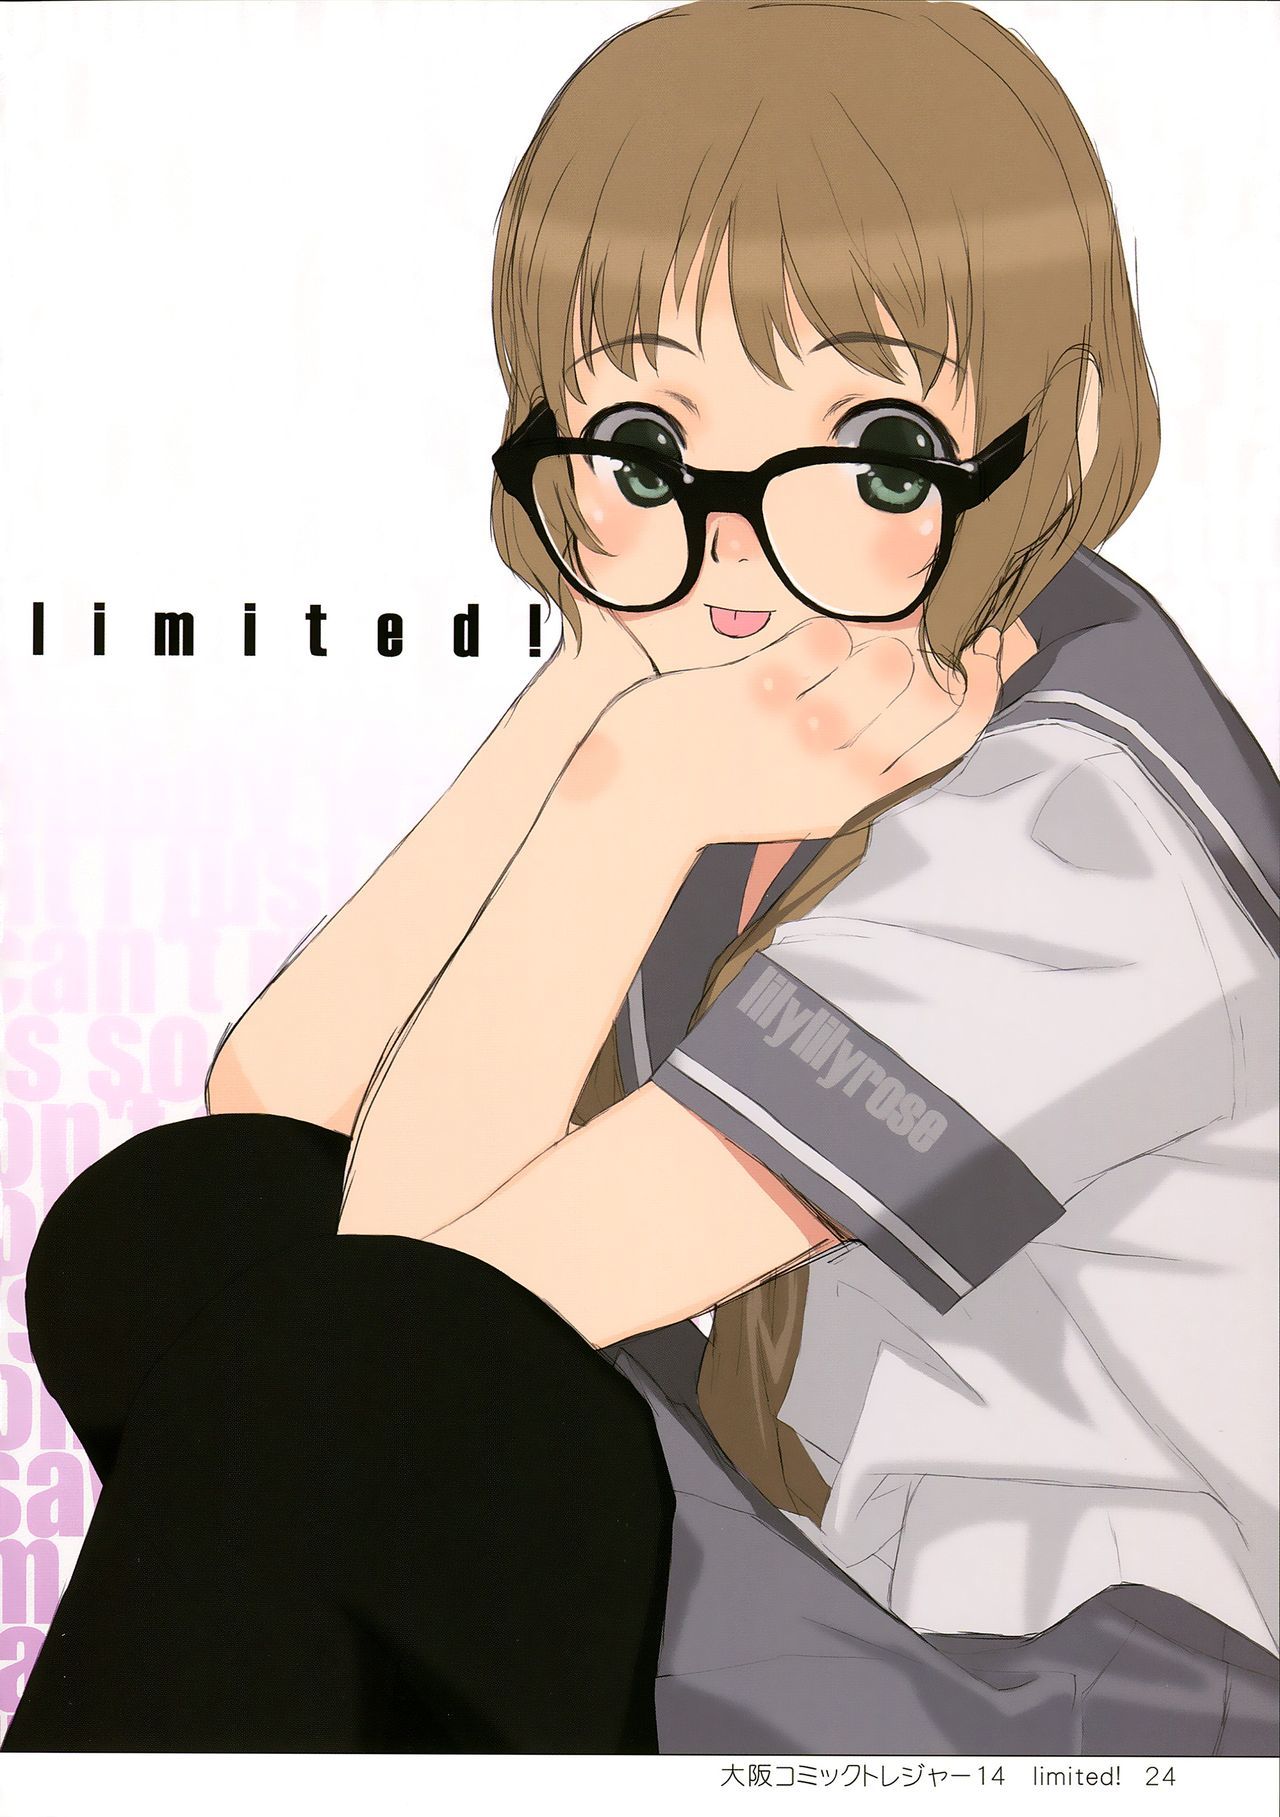 (C83) Lily Lily Rose (Mibu Natsuki) EAR NUMBER (THE IDOLM@STER CINDERELLA GIRLS) {KFC Translations} - part 2